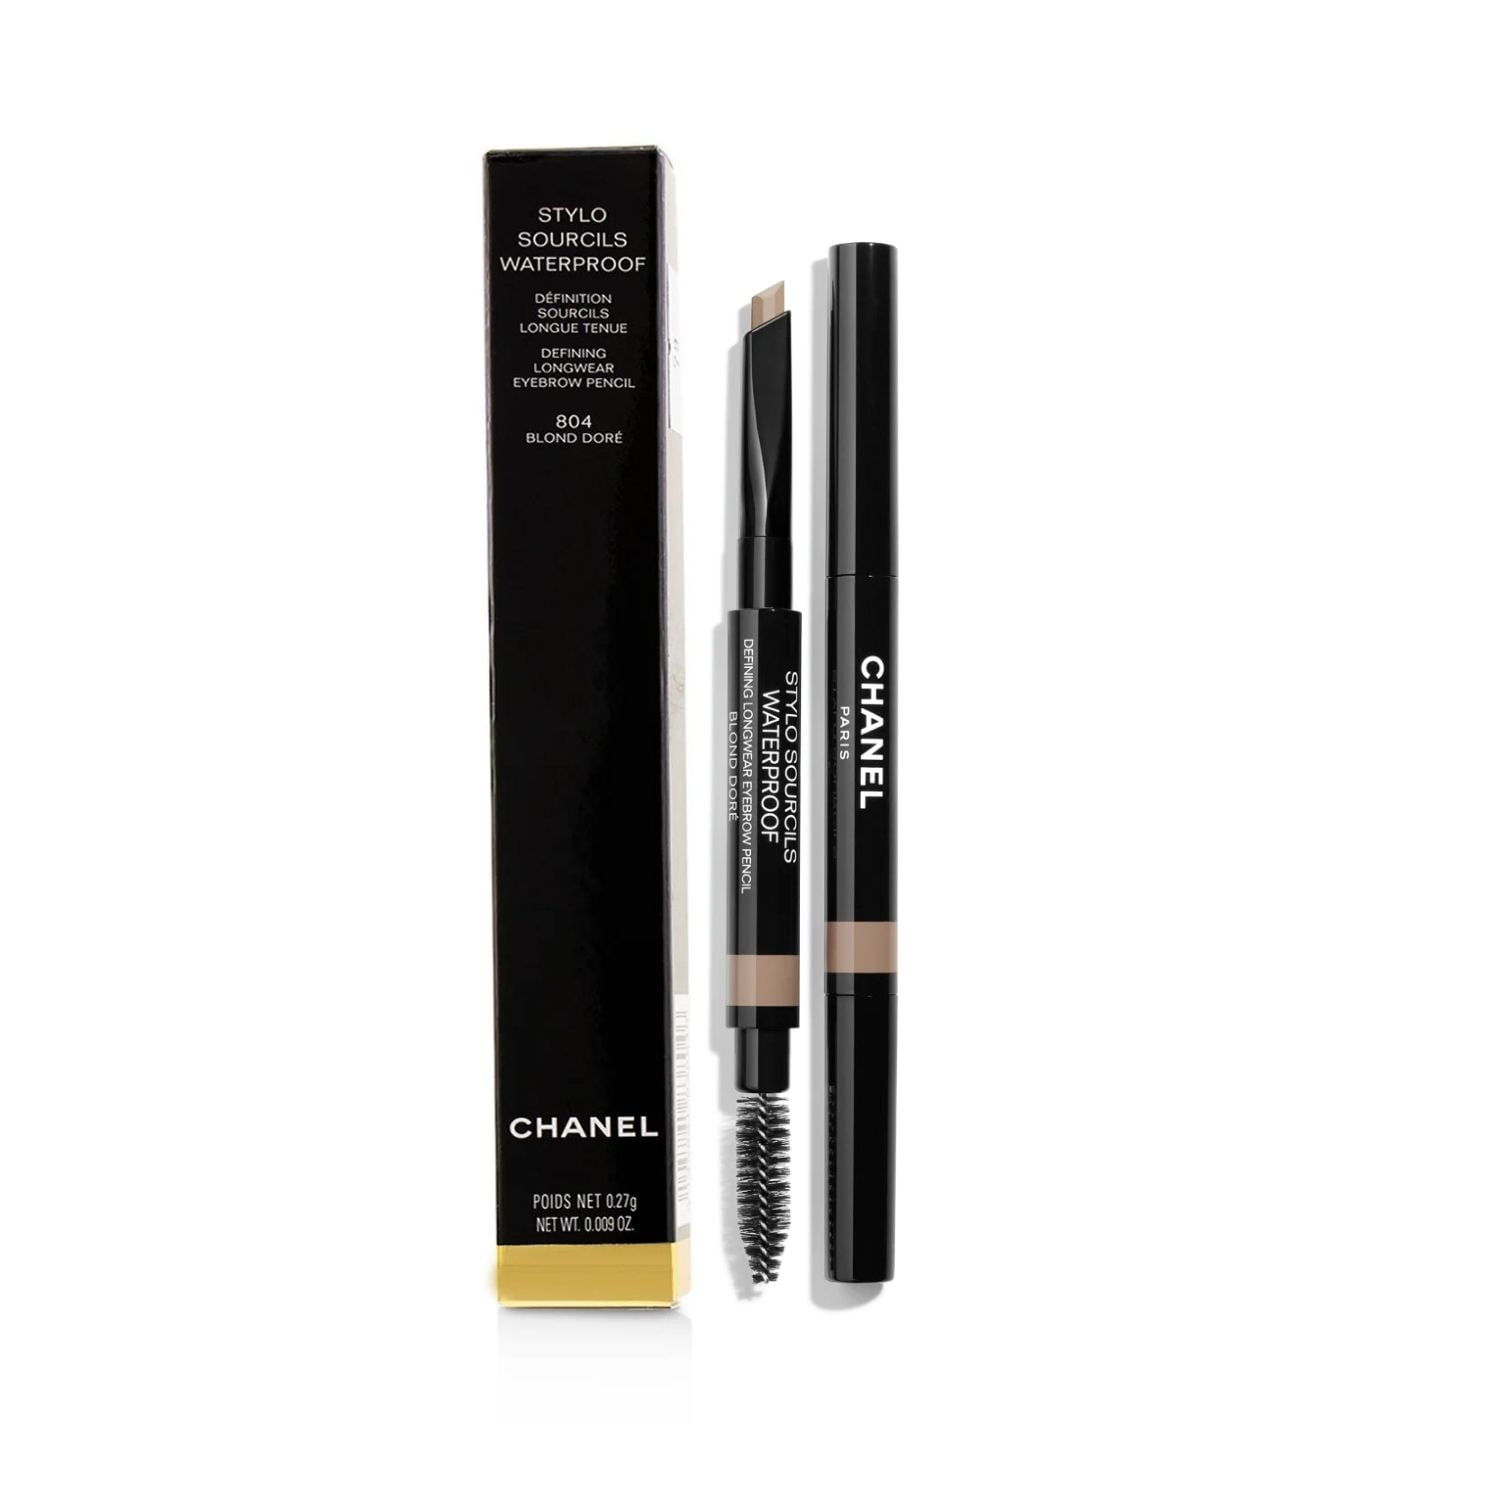 Chanel Les 4 Ombres Multi-Effect Quadra Eyeshadow2 g 0.07 oz AKB Beauty